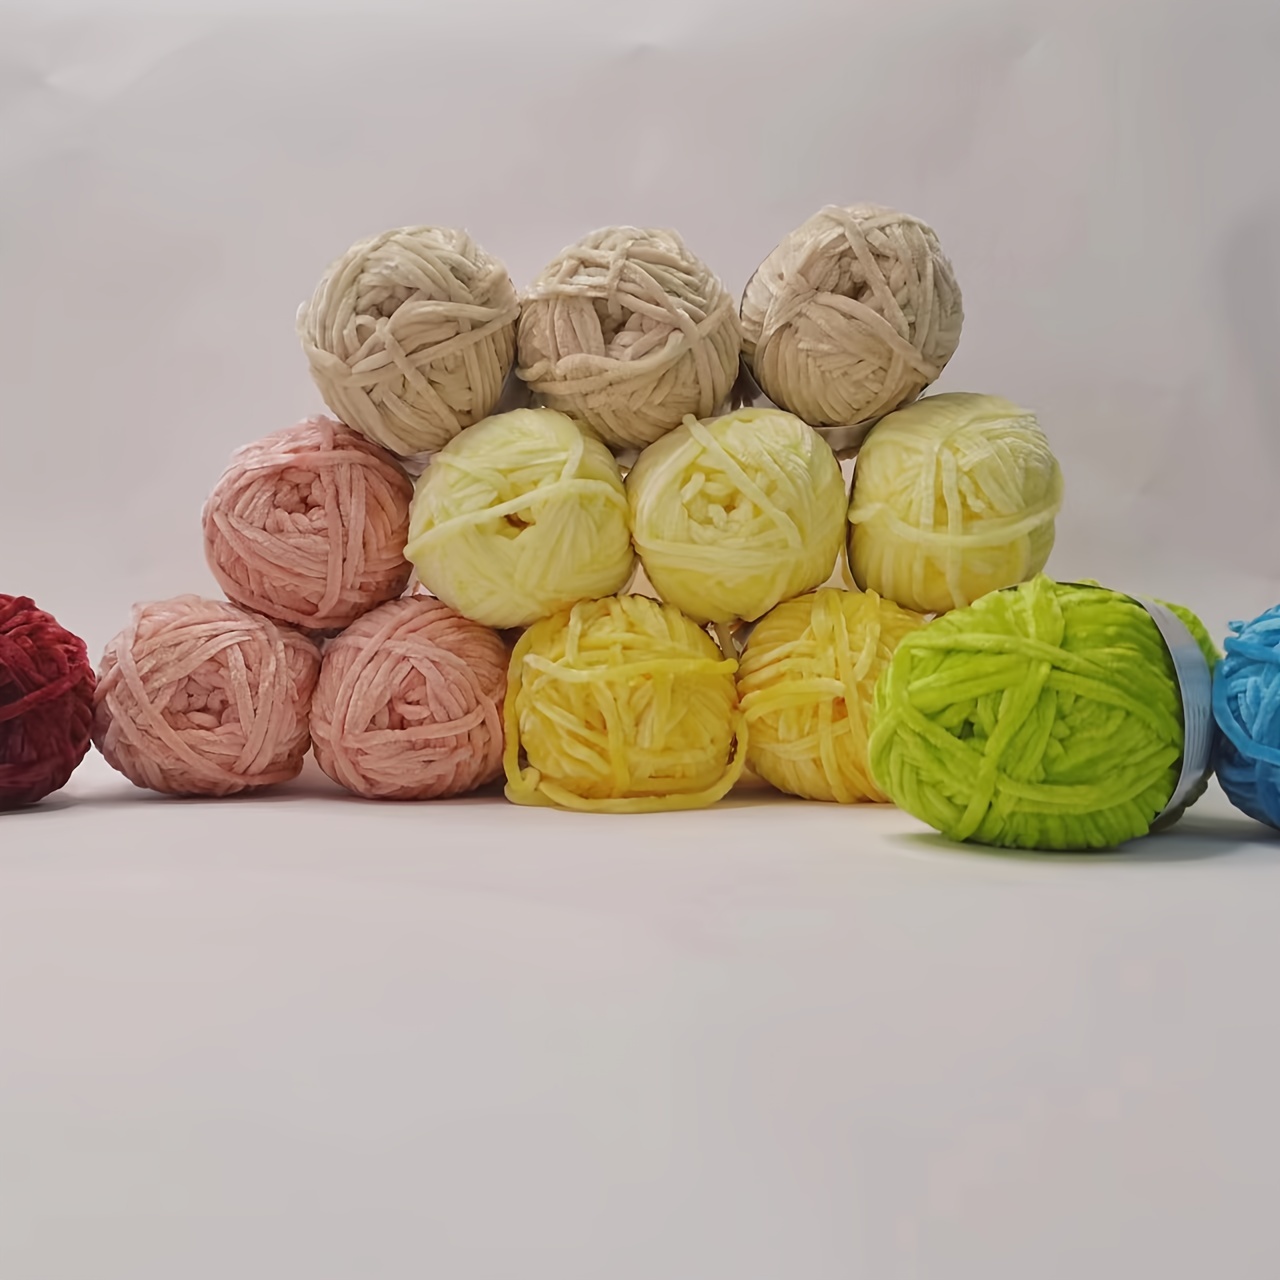 Chunky Knit Chenille Yarn Soft Velvet Yarn Crochet Knitting Blanket Yarn DIY Craft for Knit Sweaters, Blankets, Shoes, Scarves, Clothes, Black